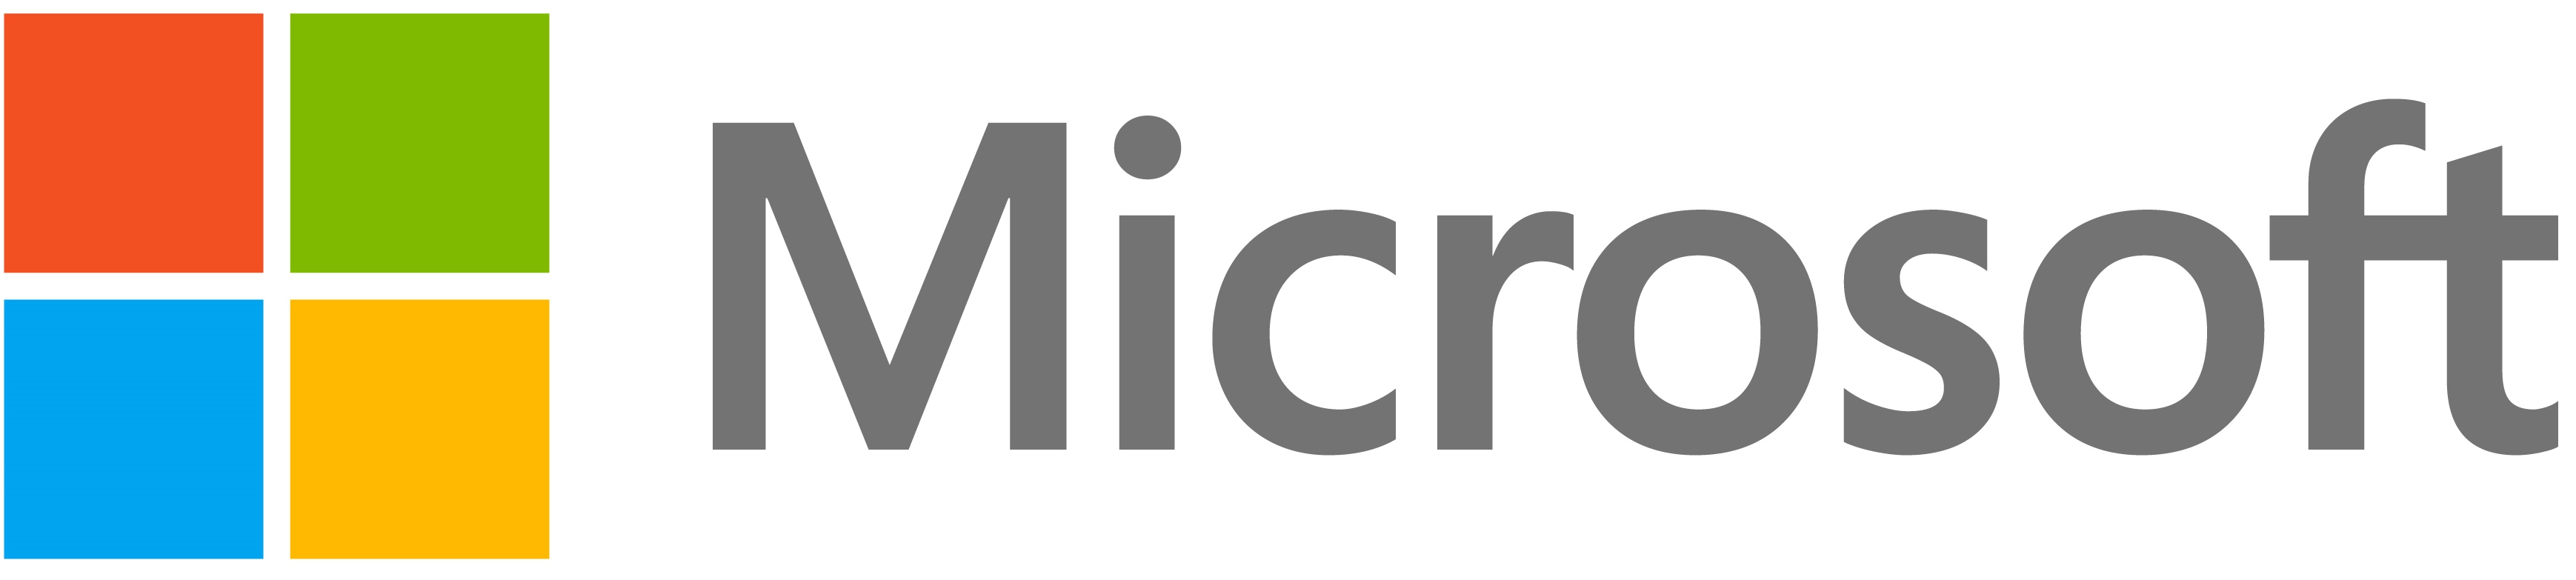 MicroSoft1.jpg